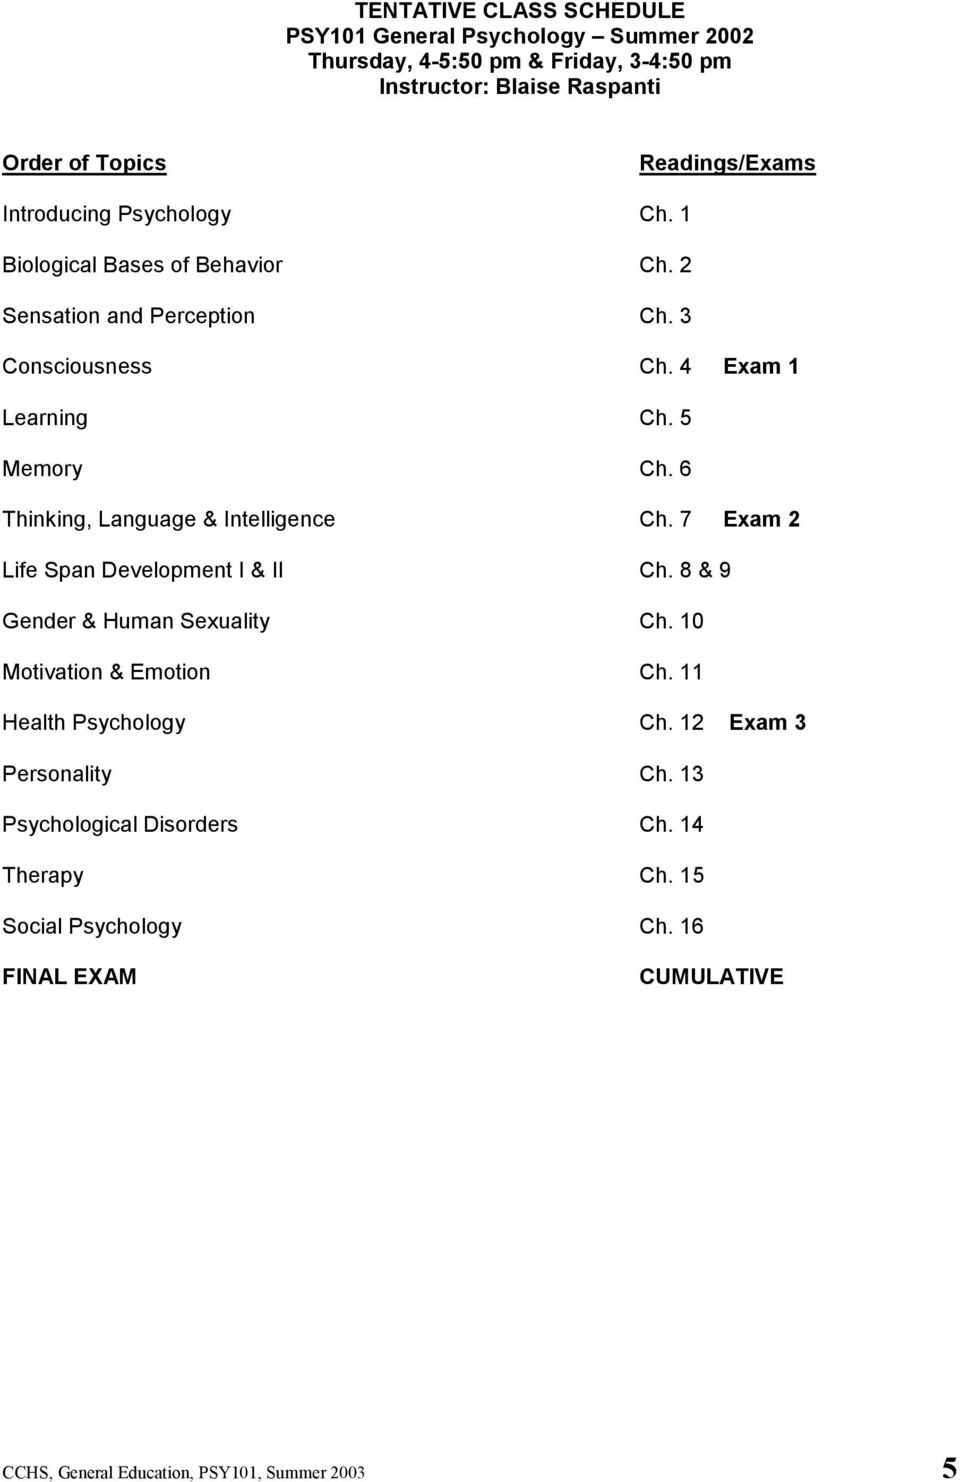 6 Thinking, Language & Intelligence Ch. 7 Exam 2 Life Span Development I & II Ch. 8 & 9 Gender & Human Sexuality Ch. 10 Motivation & Emotion Ch.